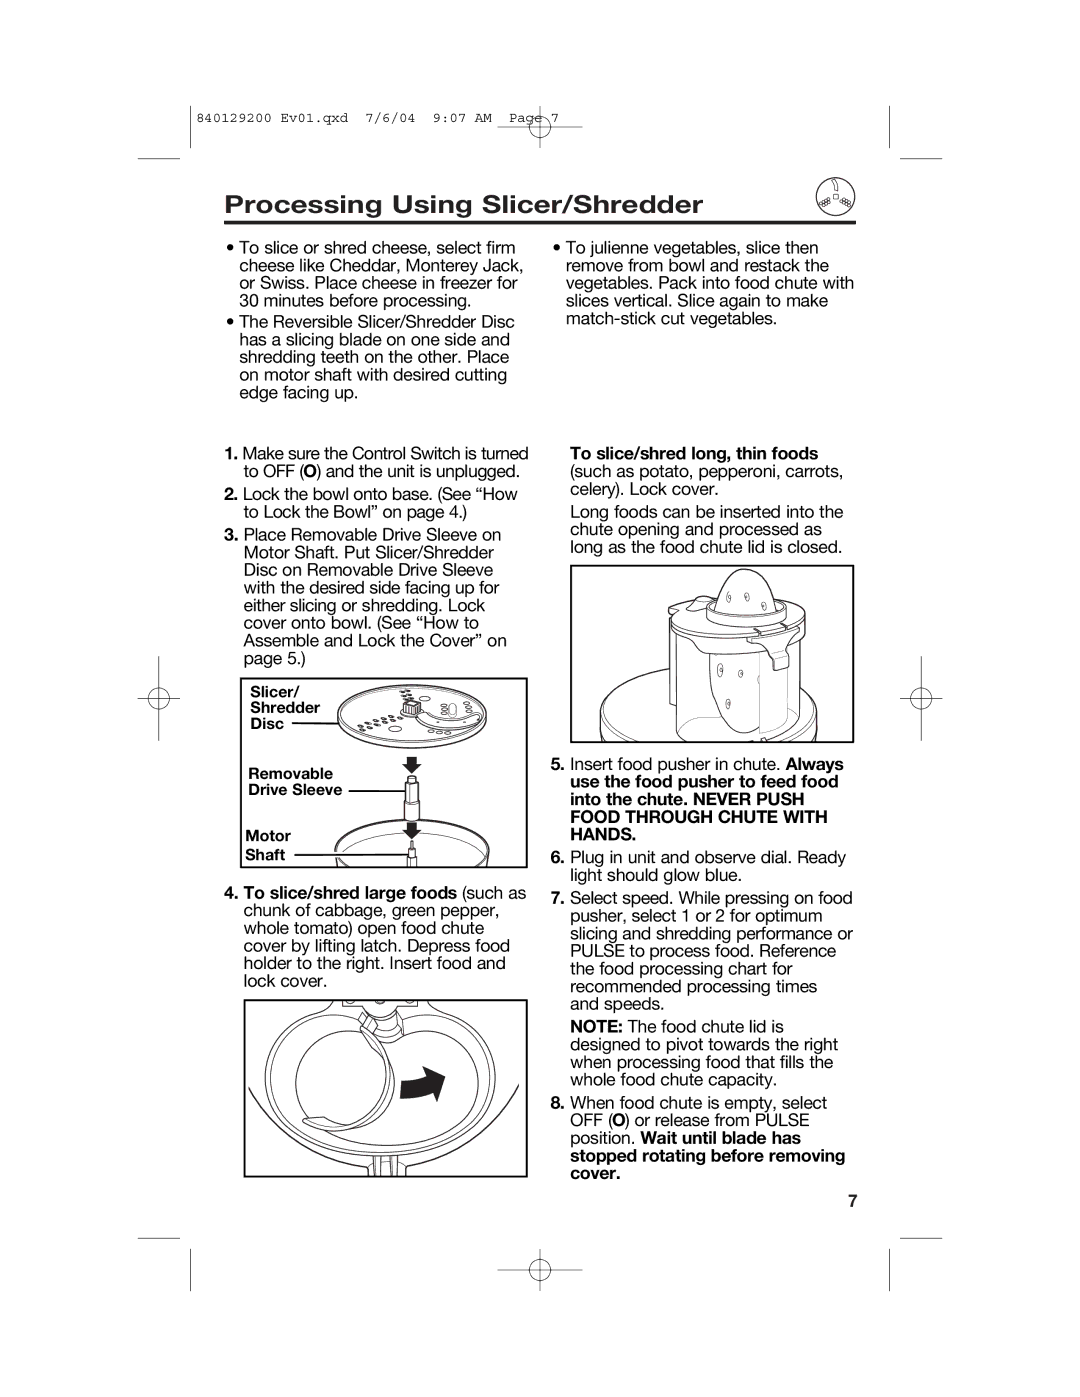 Hamilton Beach 70590C manual Processing Using Slicer/Shredder, Slicer Shredder Disc Removable Drive Sleeve Motor Shaft 